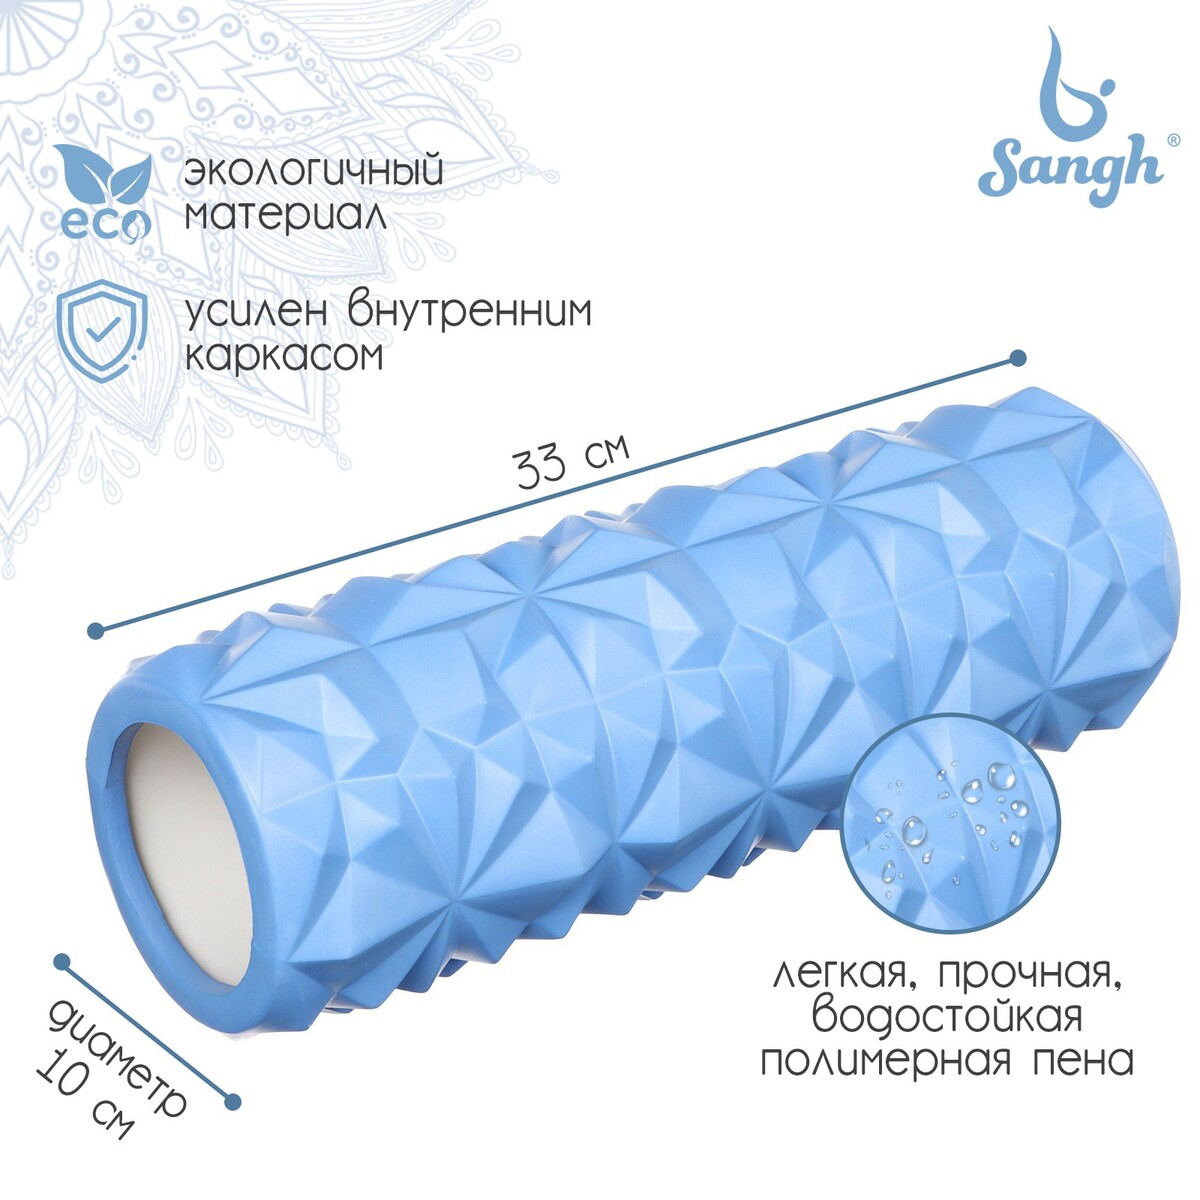 Ролик массажный sangh, 33х10 см, цвет синий ролик для йоги sportex полумягкий профи 45x15cm синий эва b33084 1